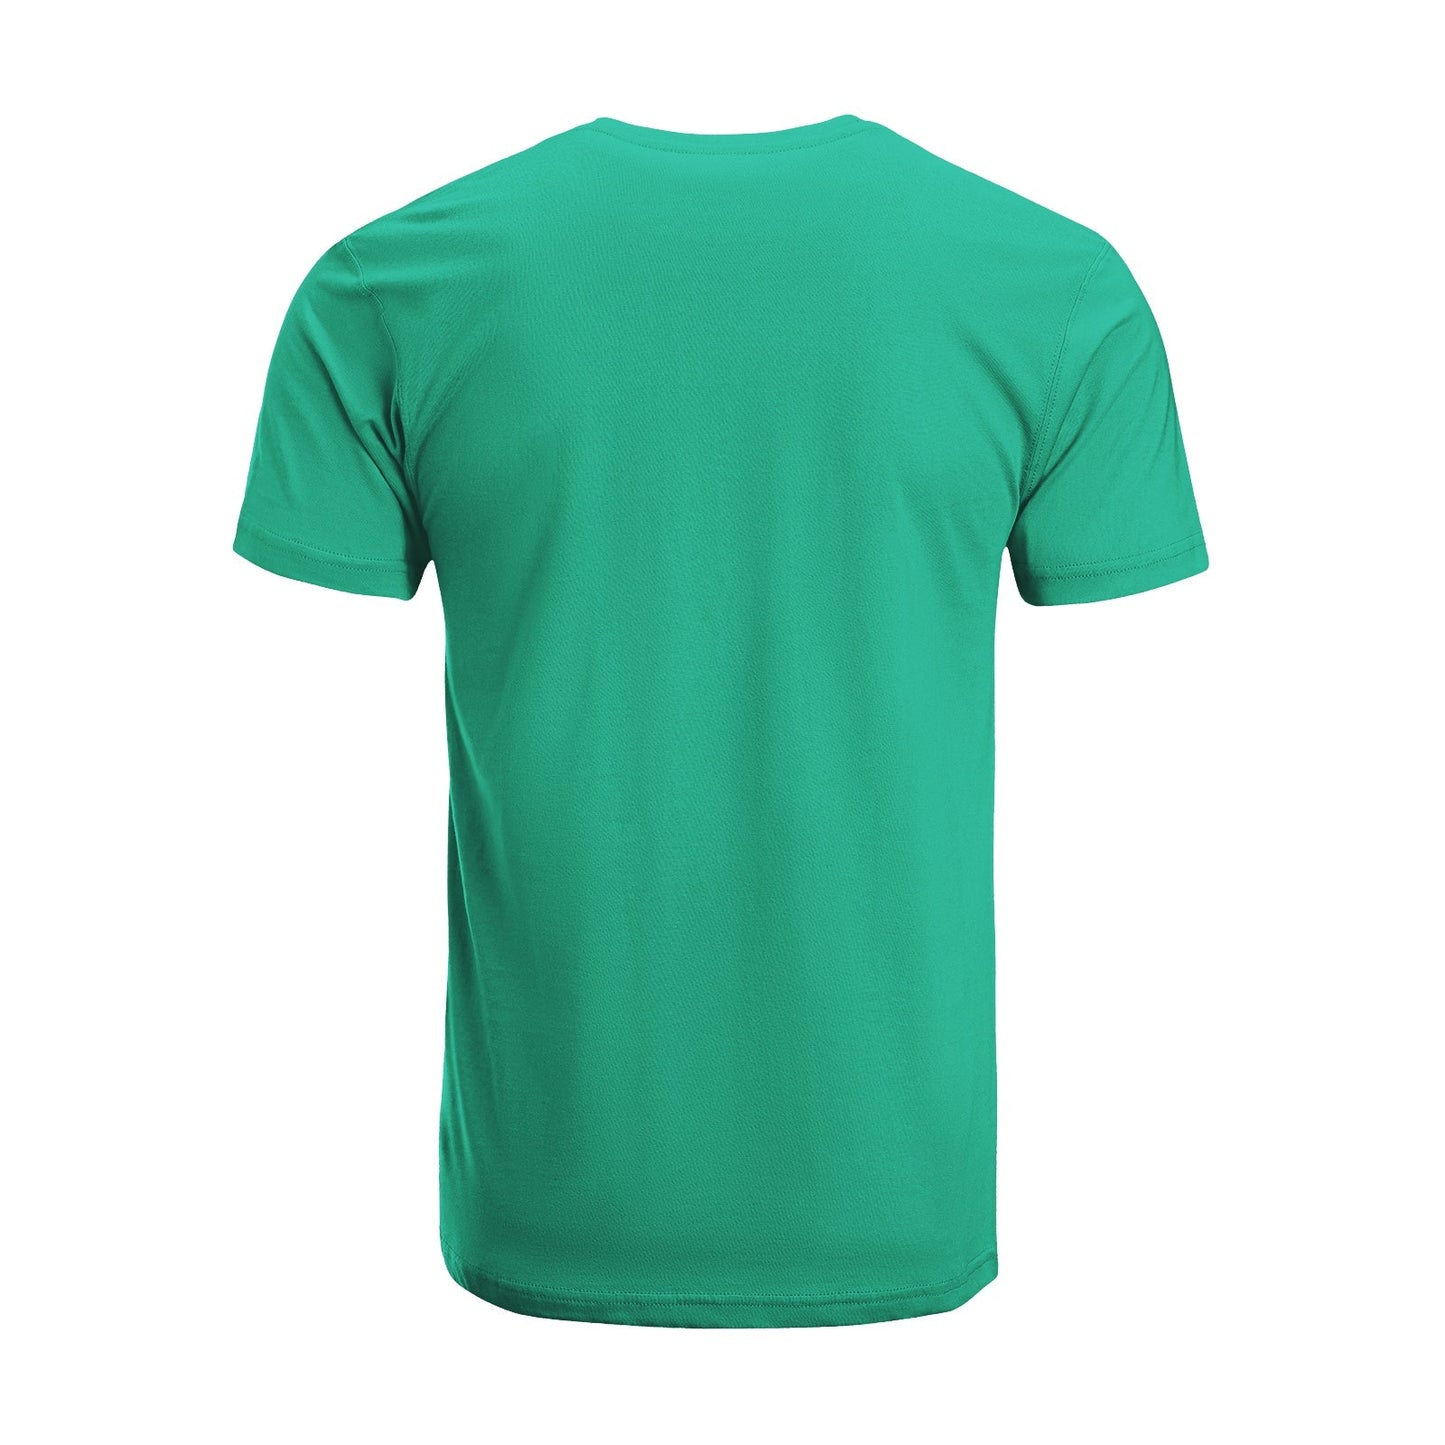 Unisex Short Sleeve Crew Neck Cotton Jersey T-Shirt VEGAN 22